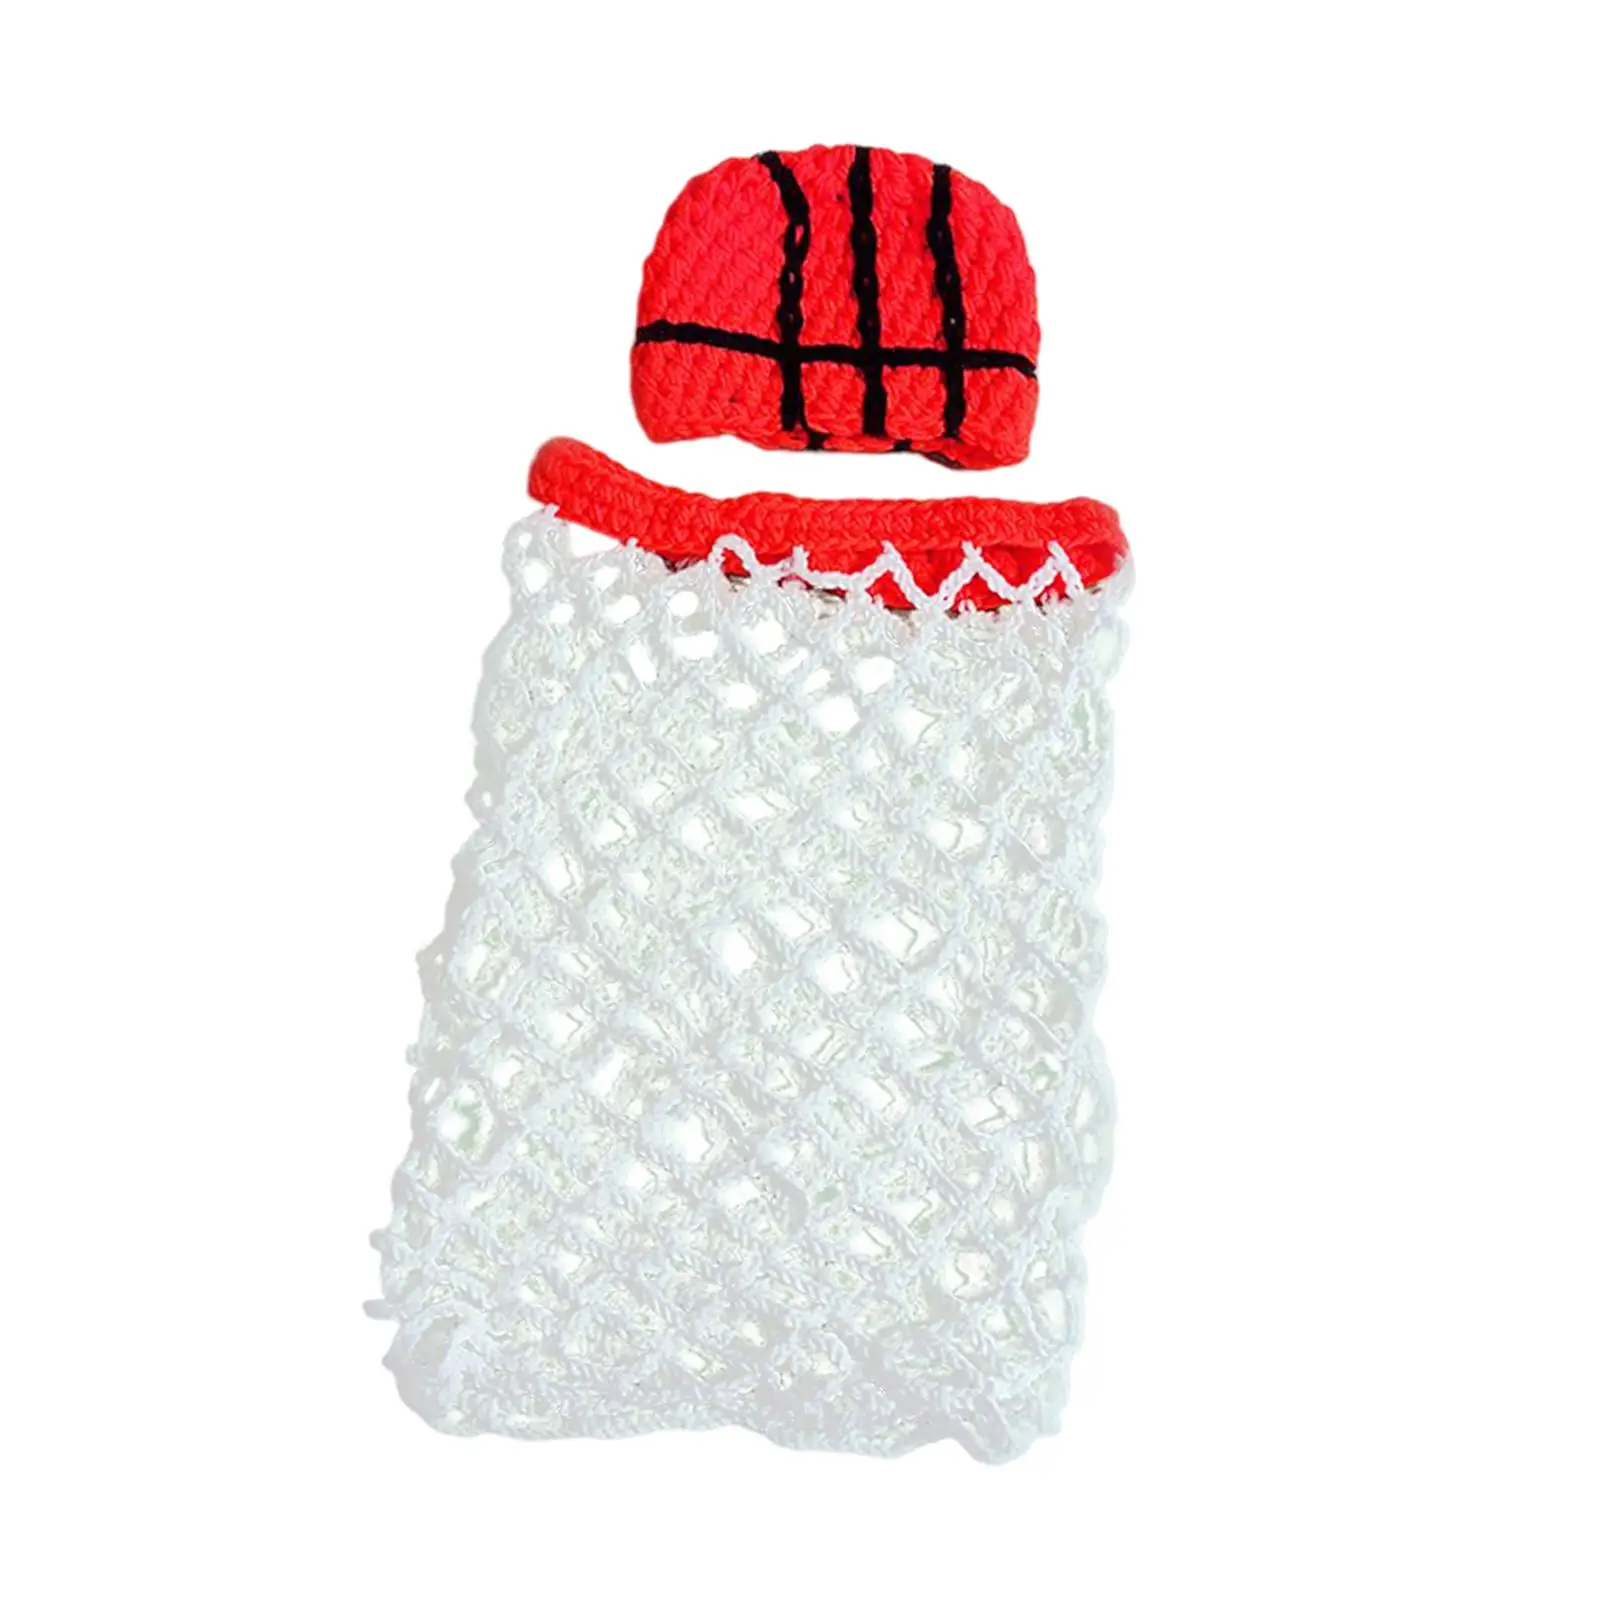 2x Newborn Basketball Crochet Costume Infant Photography Props